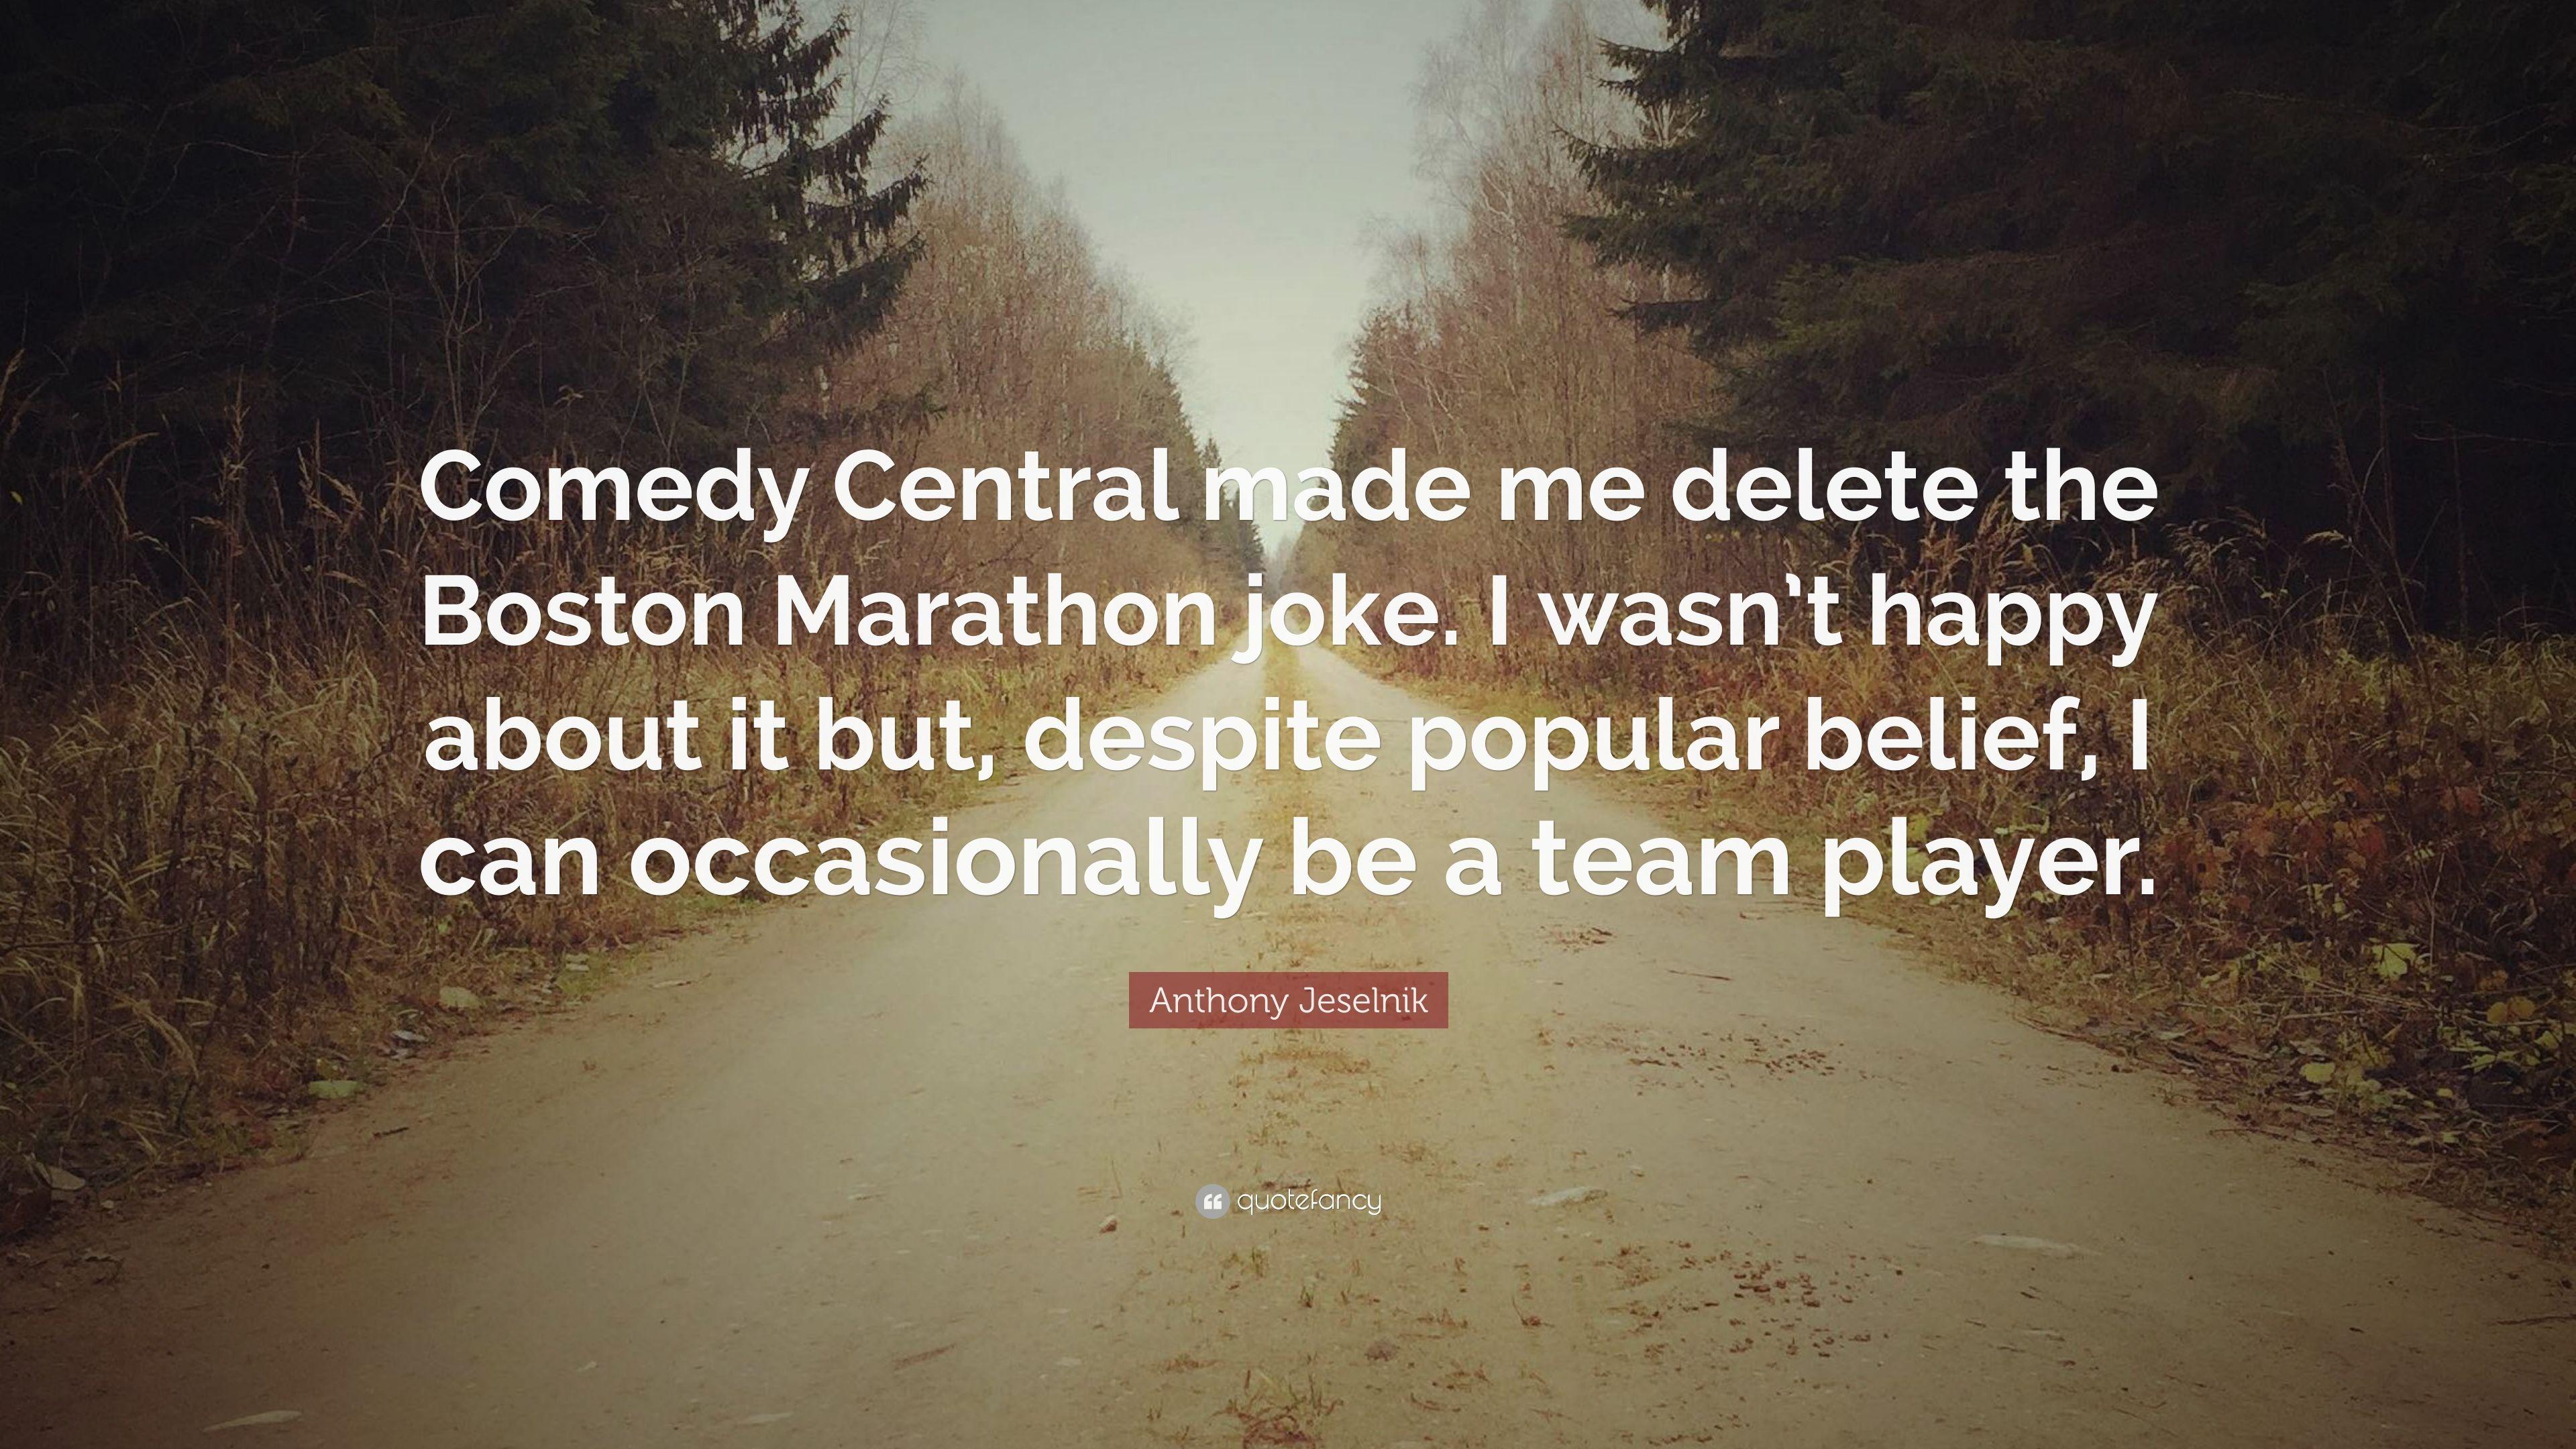 Anthony Jeselnik Quote: “Comedy Central made me delete the Boston